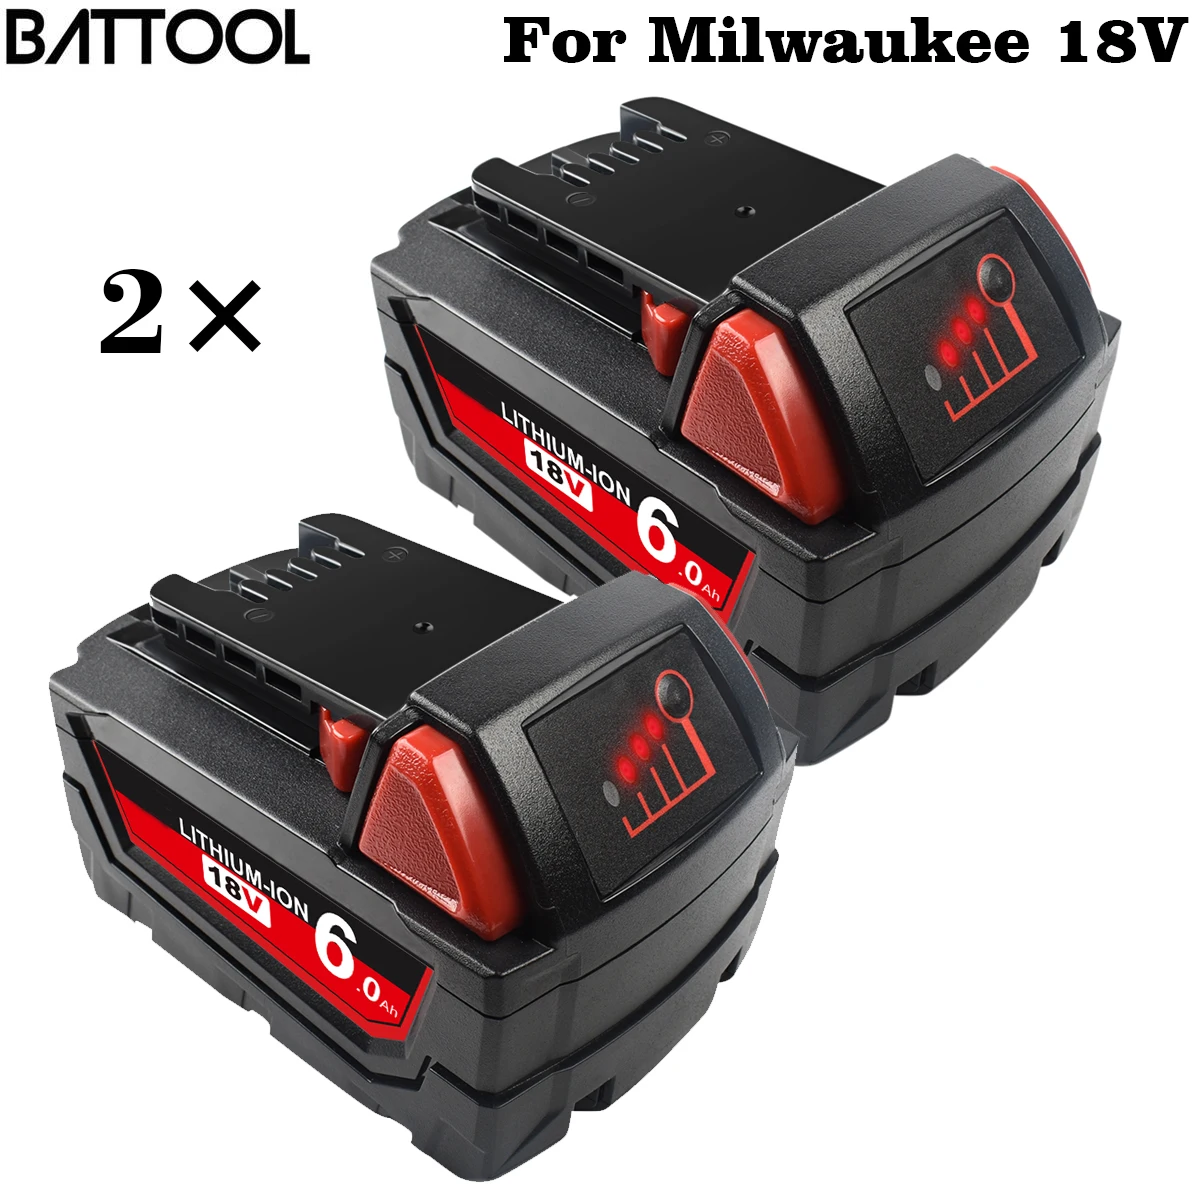 

BATTOOL 2x 6.0Ah 18V Power Tool Battery for Milwaukee M18 48-11-1815 48-11-1850 2604-22 2604-20 2708-22 2607-22 48-11-1828